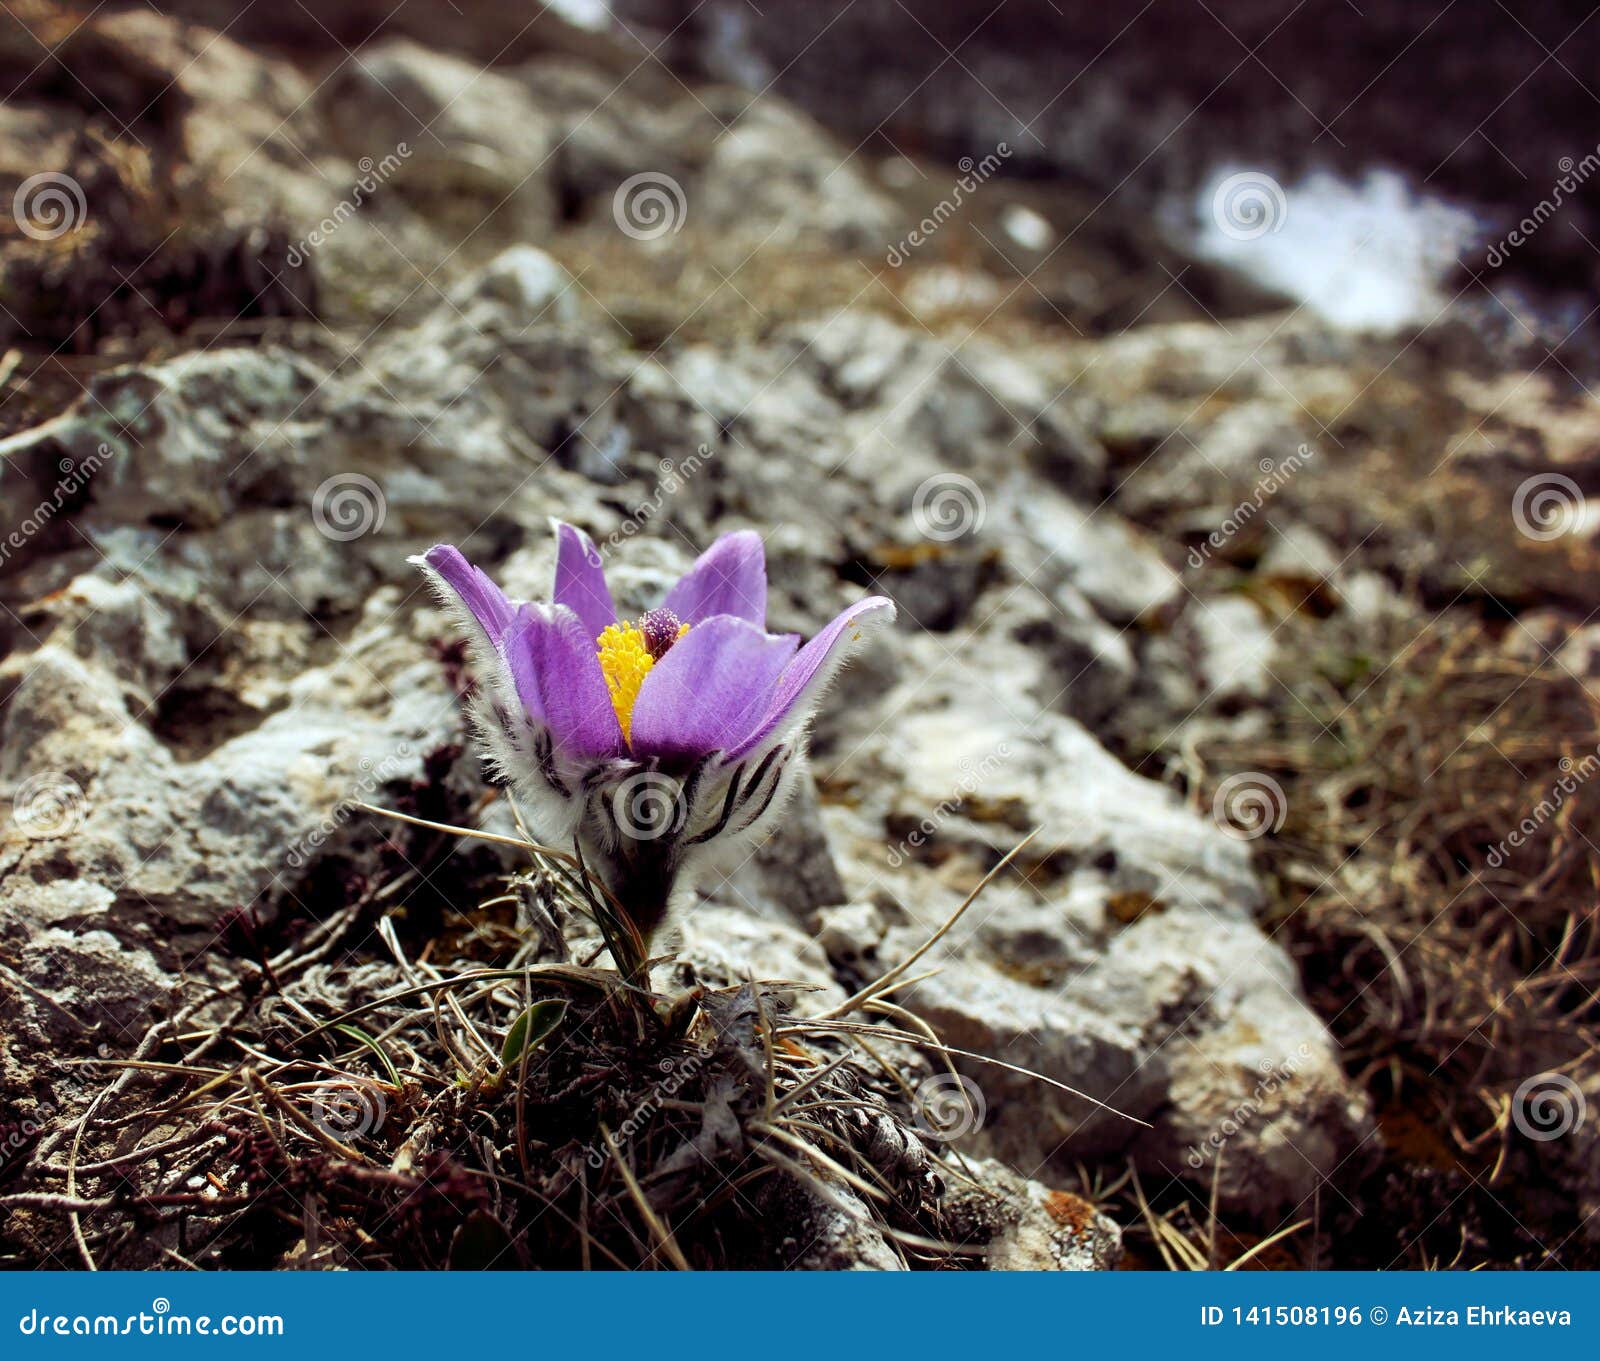 Early Spring Flowers Purple Crocuses Blue Violet Mountain